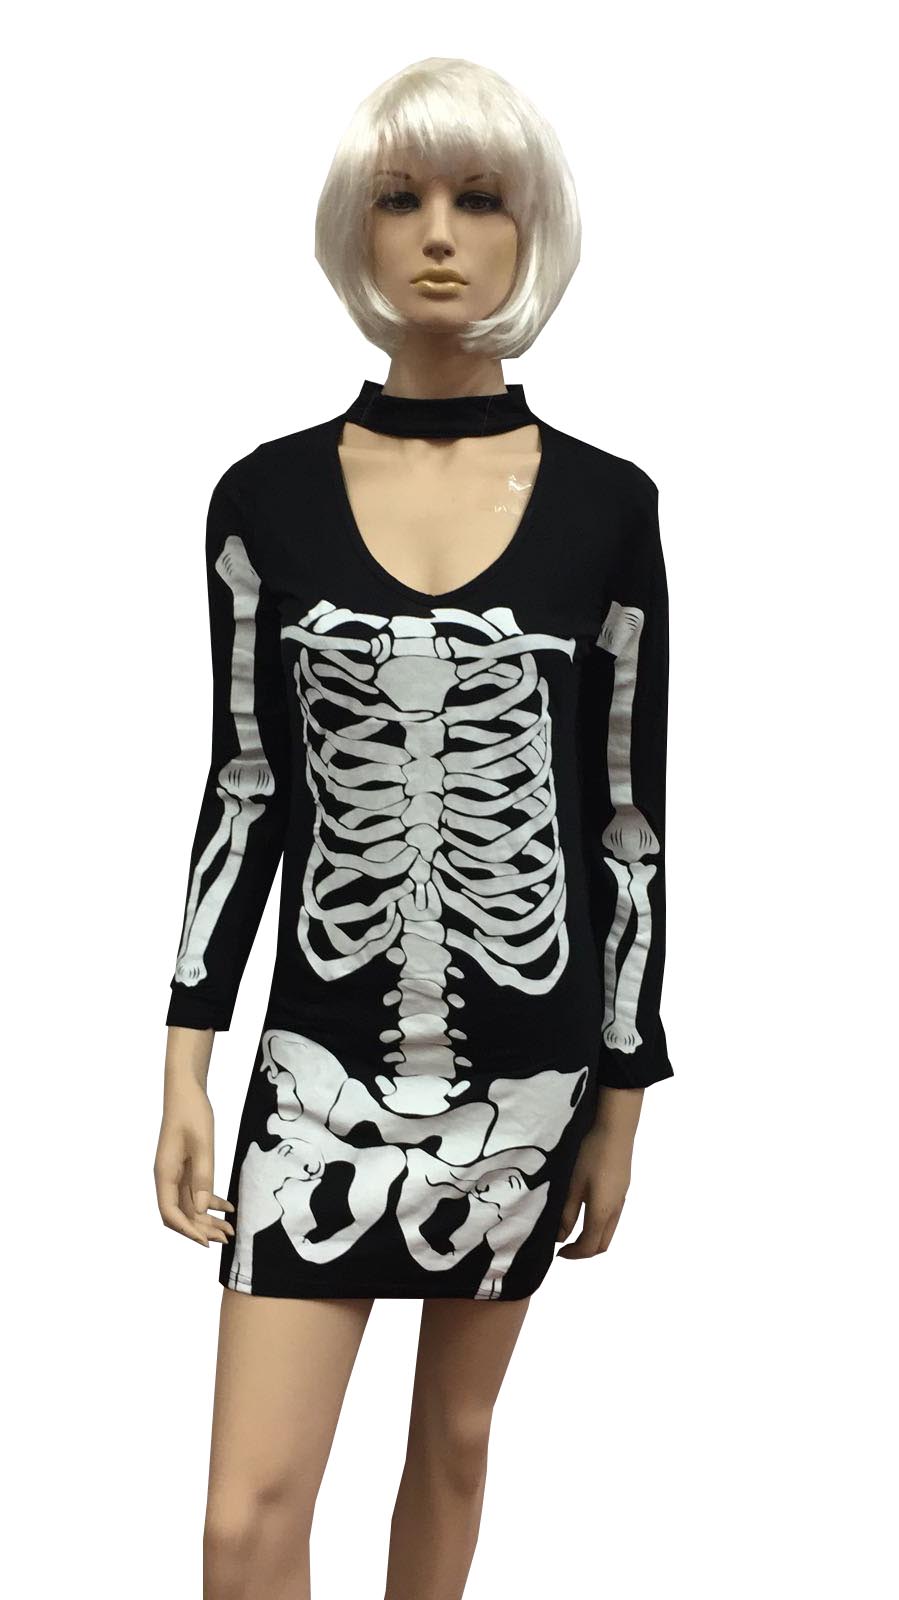 Girls Skeleton Print Bodycon Mini Dress Costume